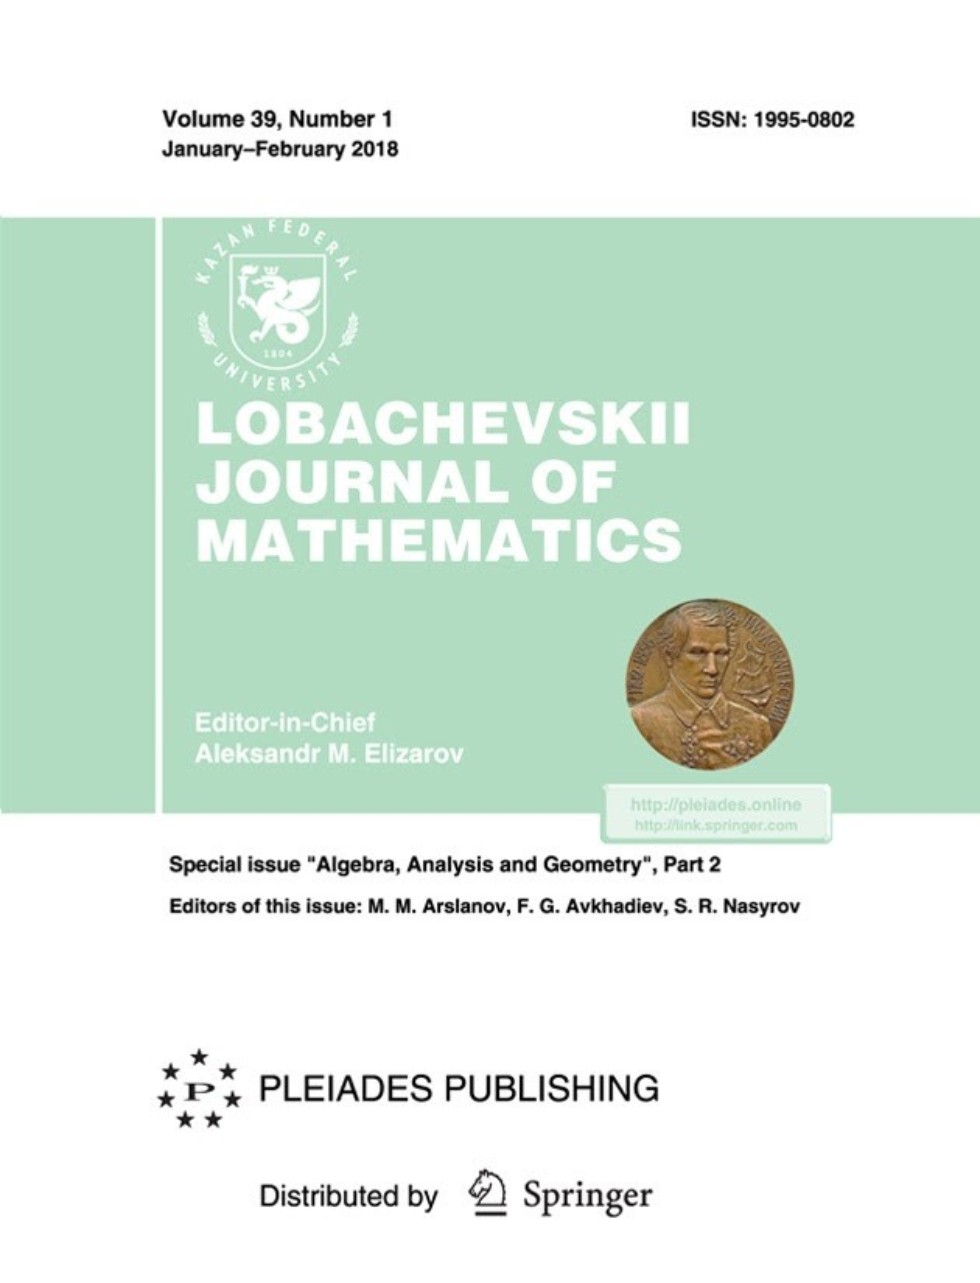   Lobachevskii Journal of Mathematics   Q2 Scopus ,Lobachevskii Journal of Mathematics,   Scopus,  Q2.